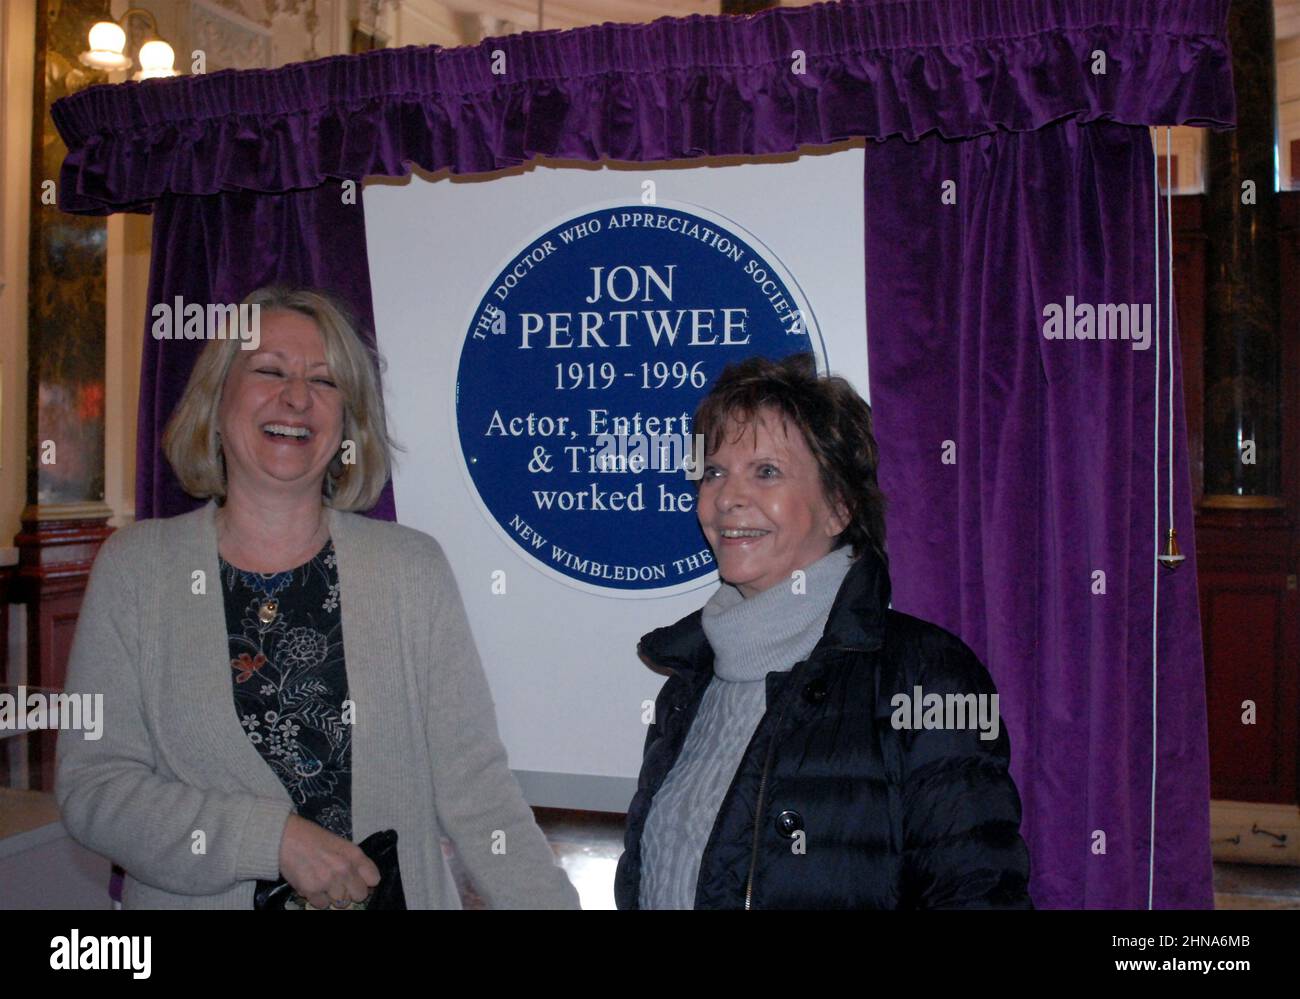 Dariel Pertwee (left) & her mother Ingeborg Pertwee (nee Ingeborg Rhoesa), daughter and widow of Doctor Who actor Jon Pertwee at blue plaque unveiling Stock Photo